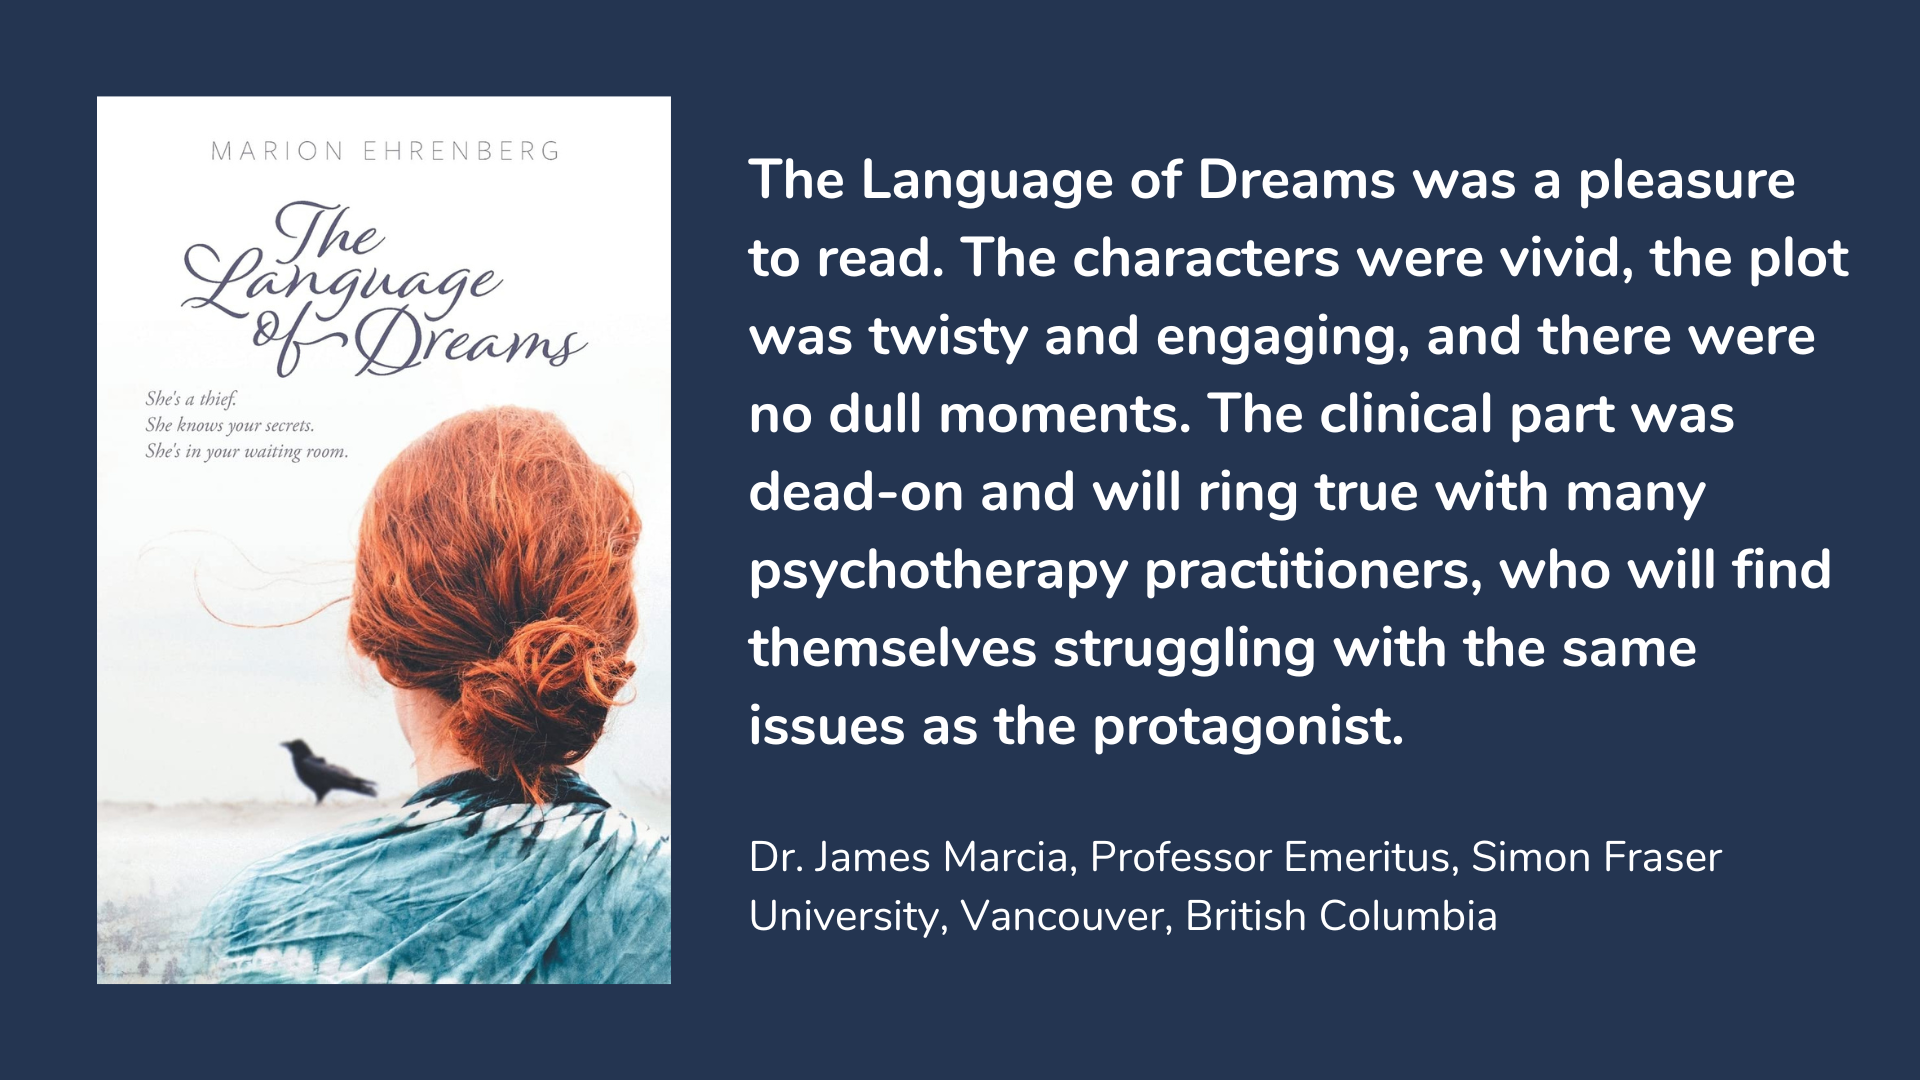 The Language of Dreams, book cover and description